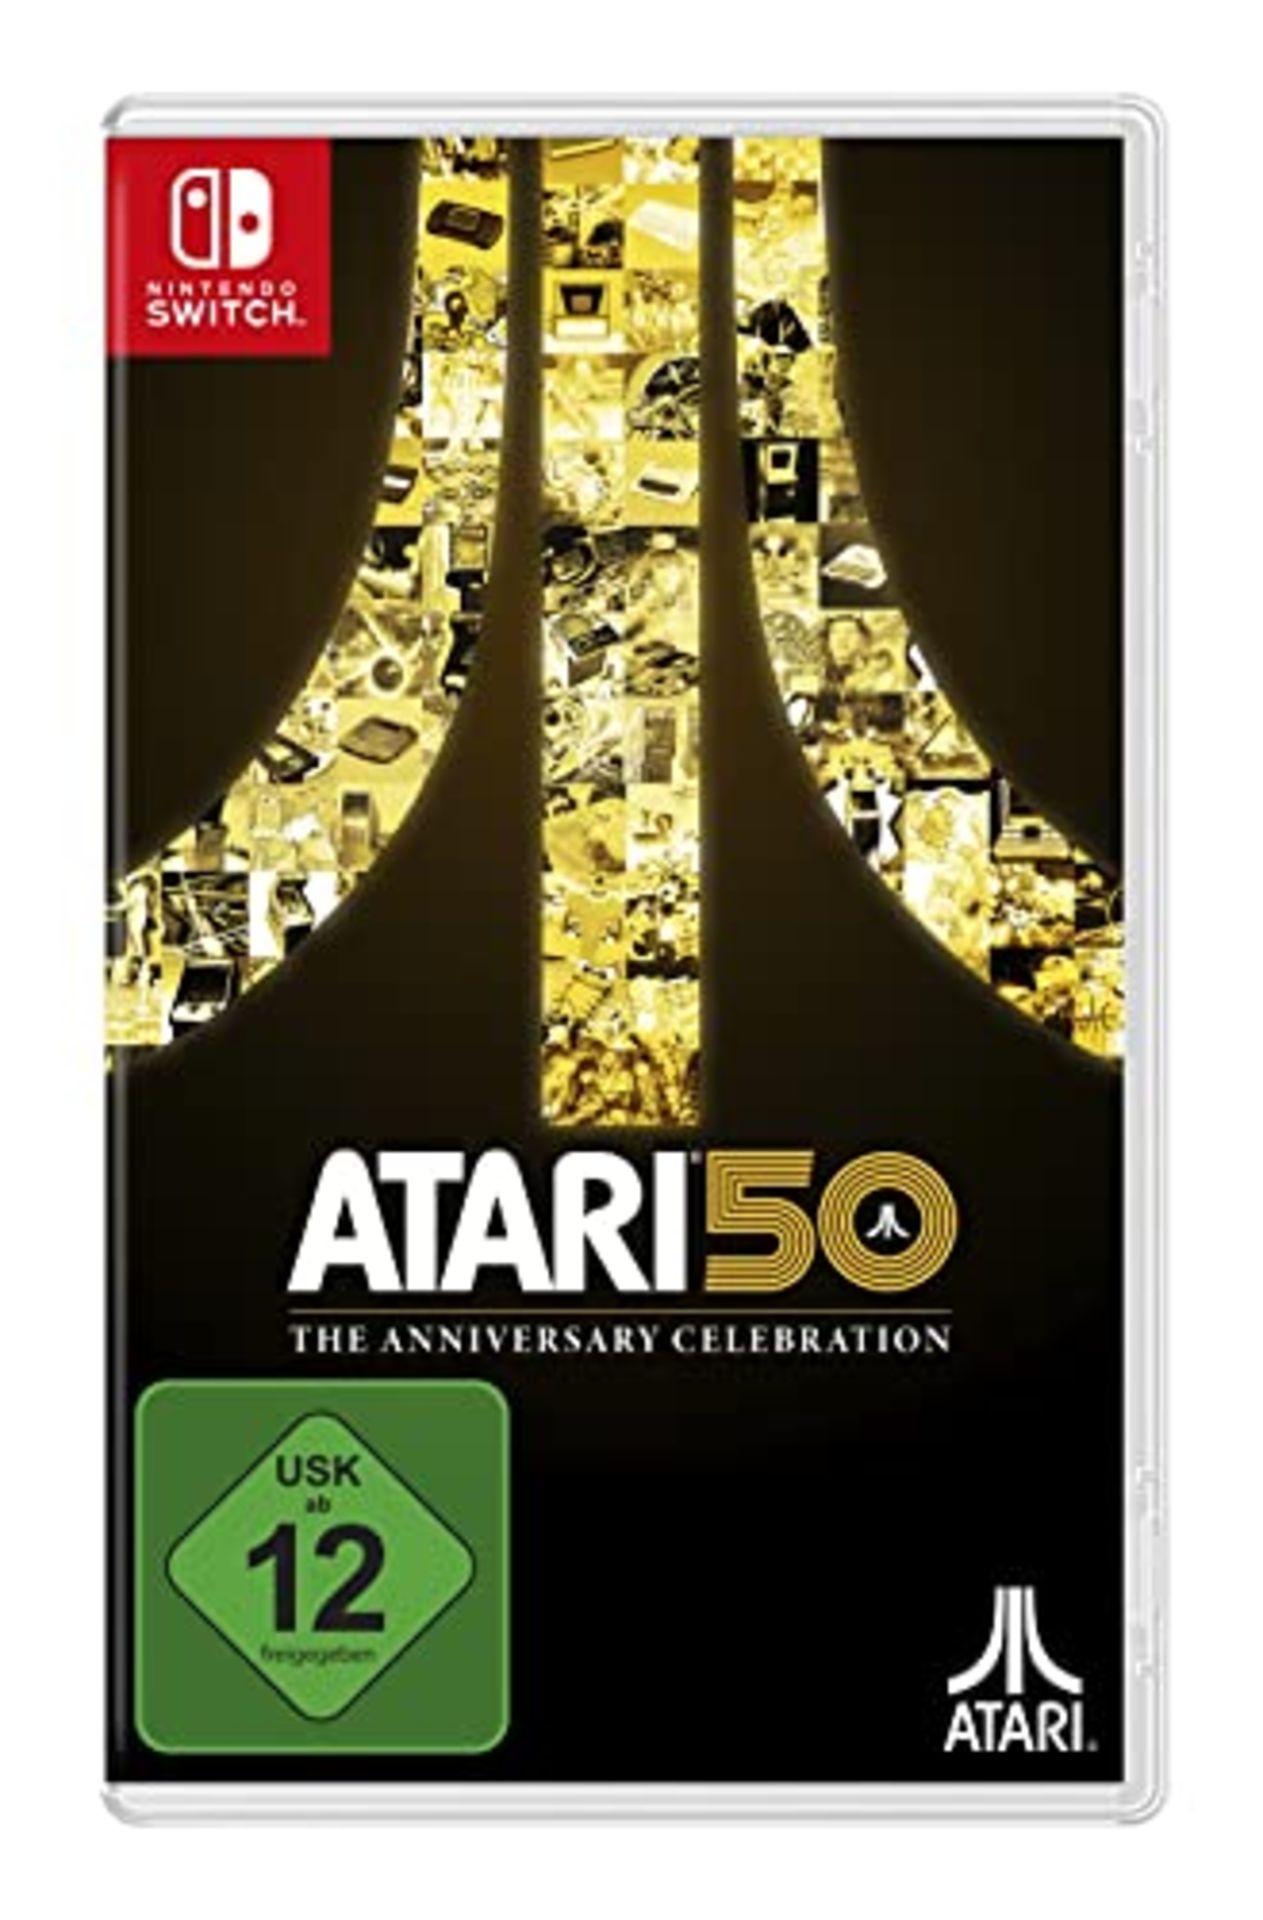 Atari 50: The Anniversary Celebration - Image 4 of 6